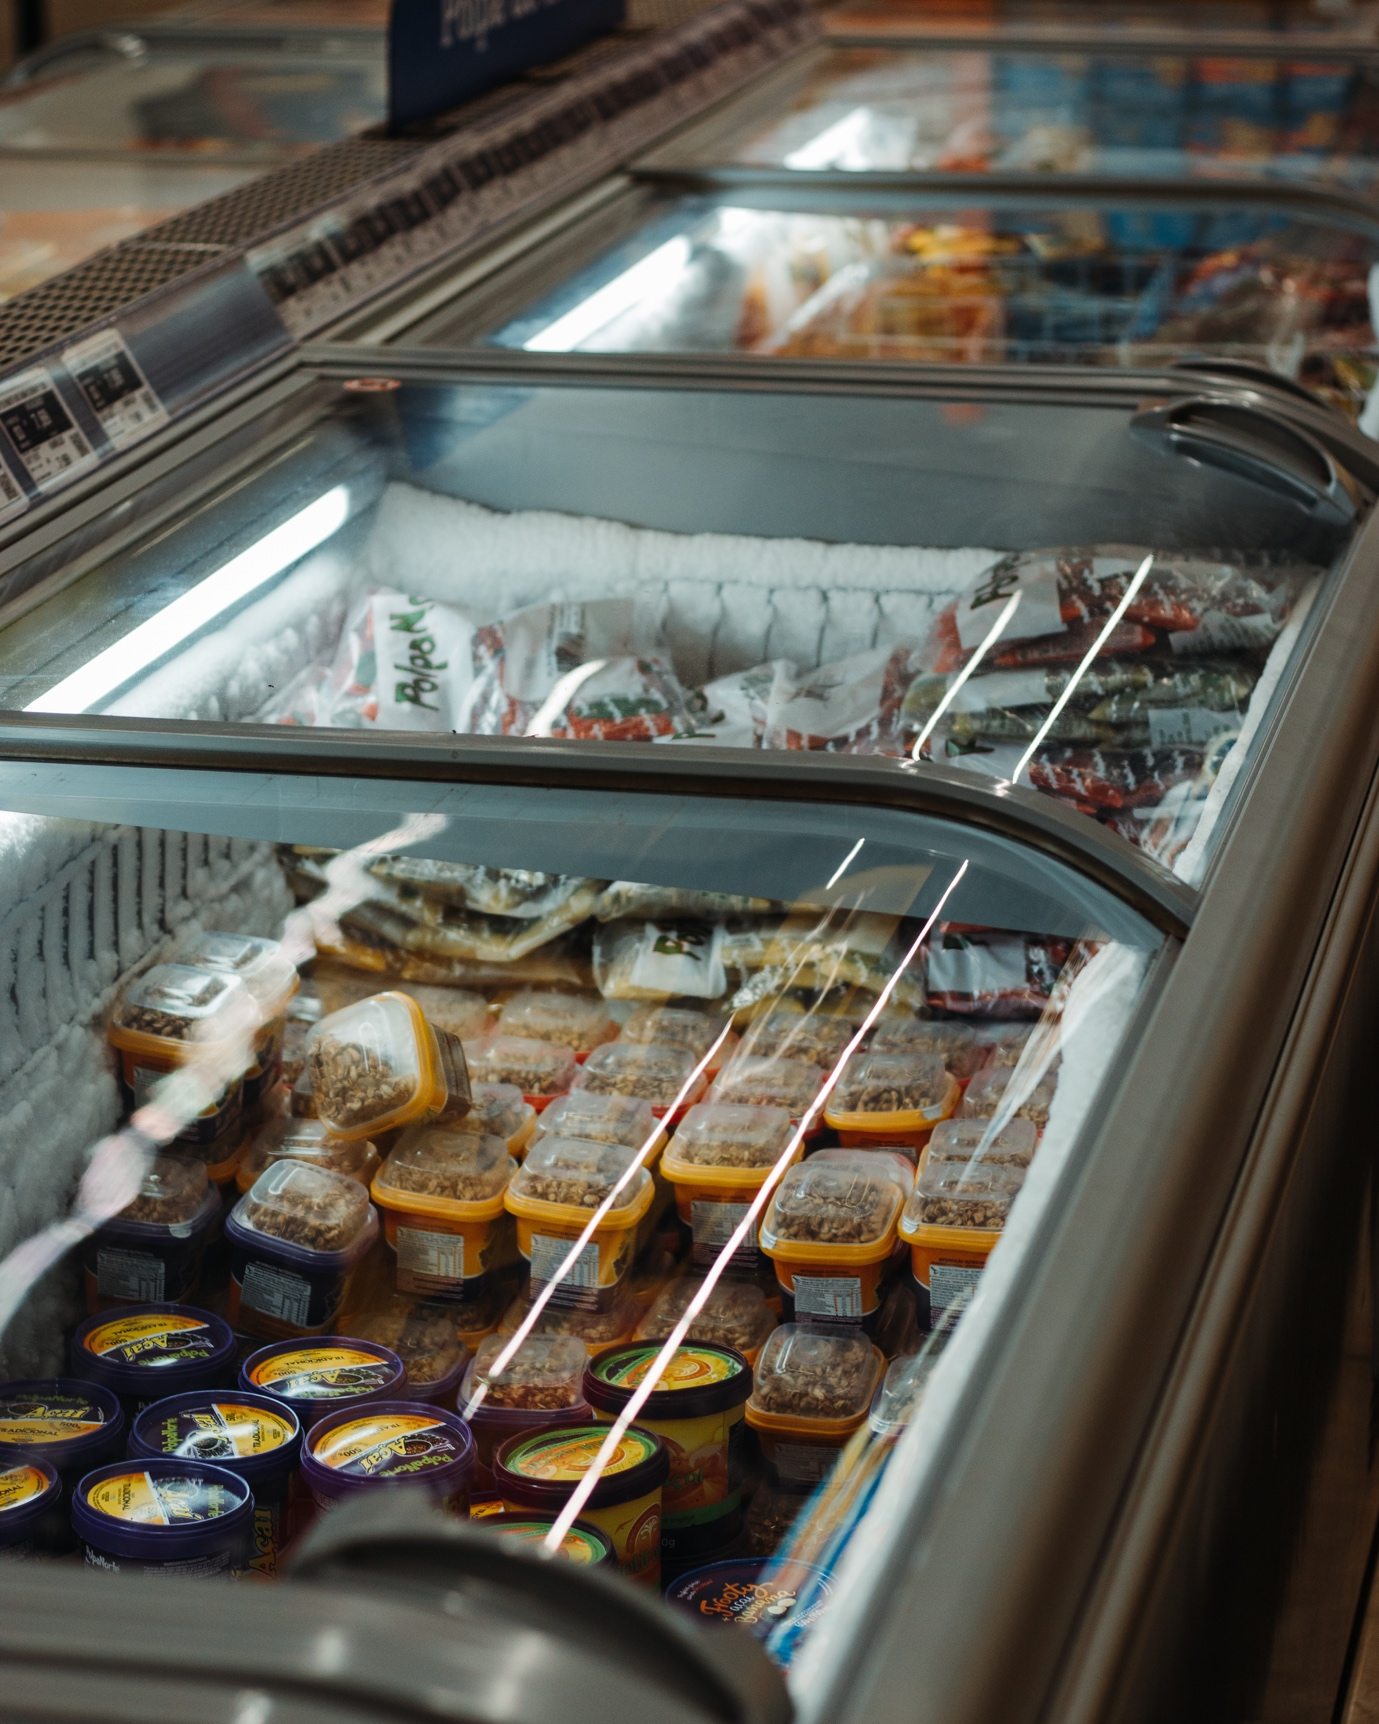 Ice cream stored in a refrigerator
